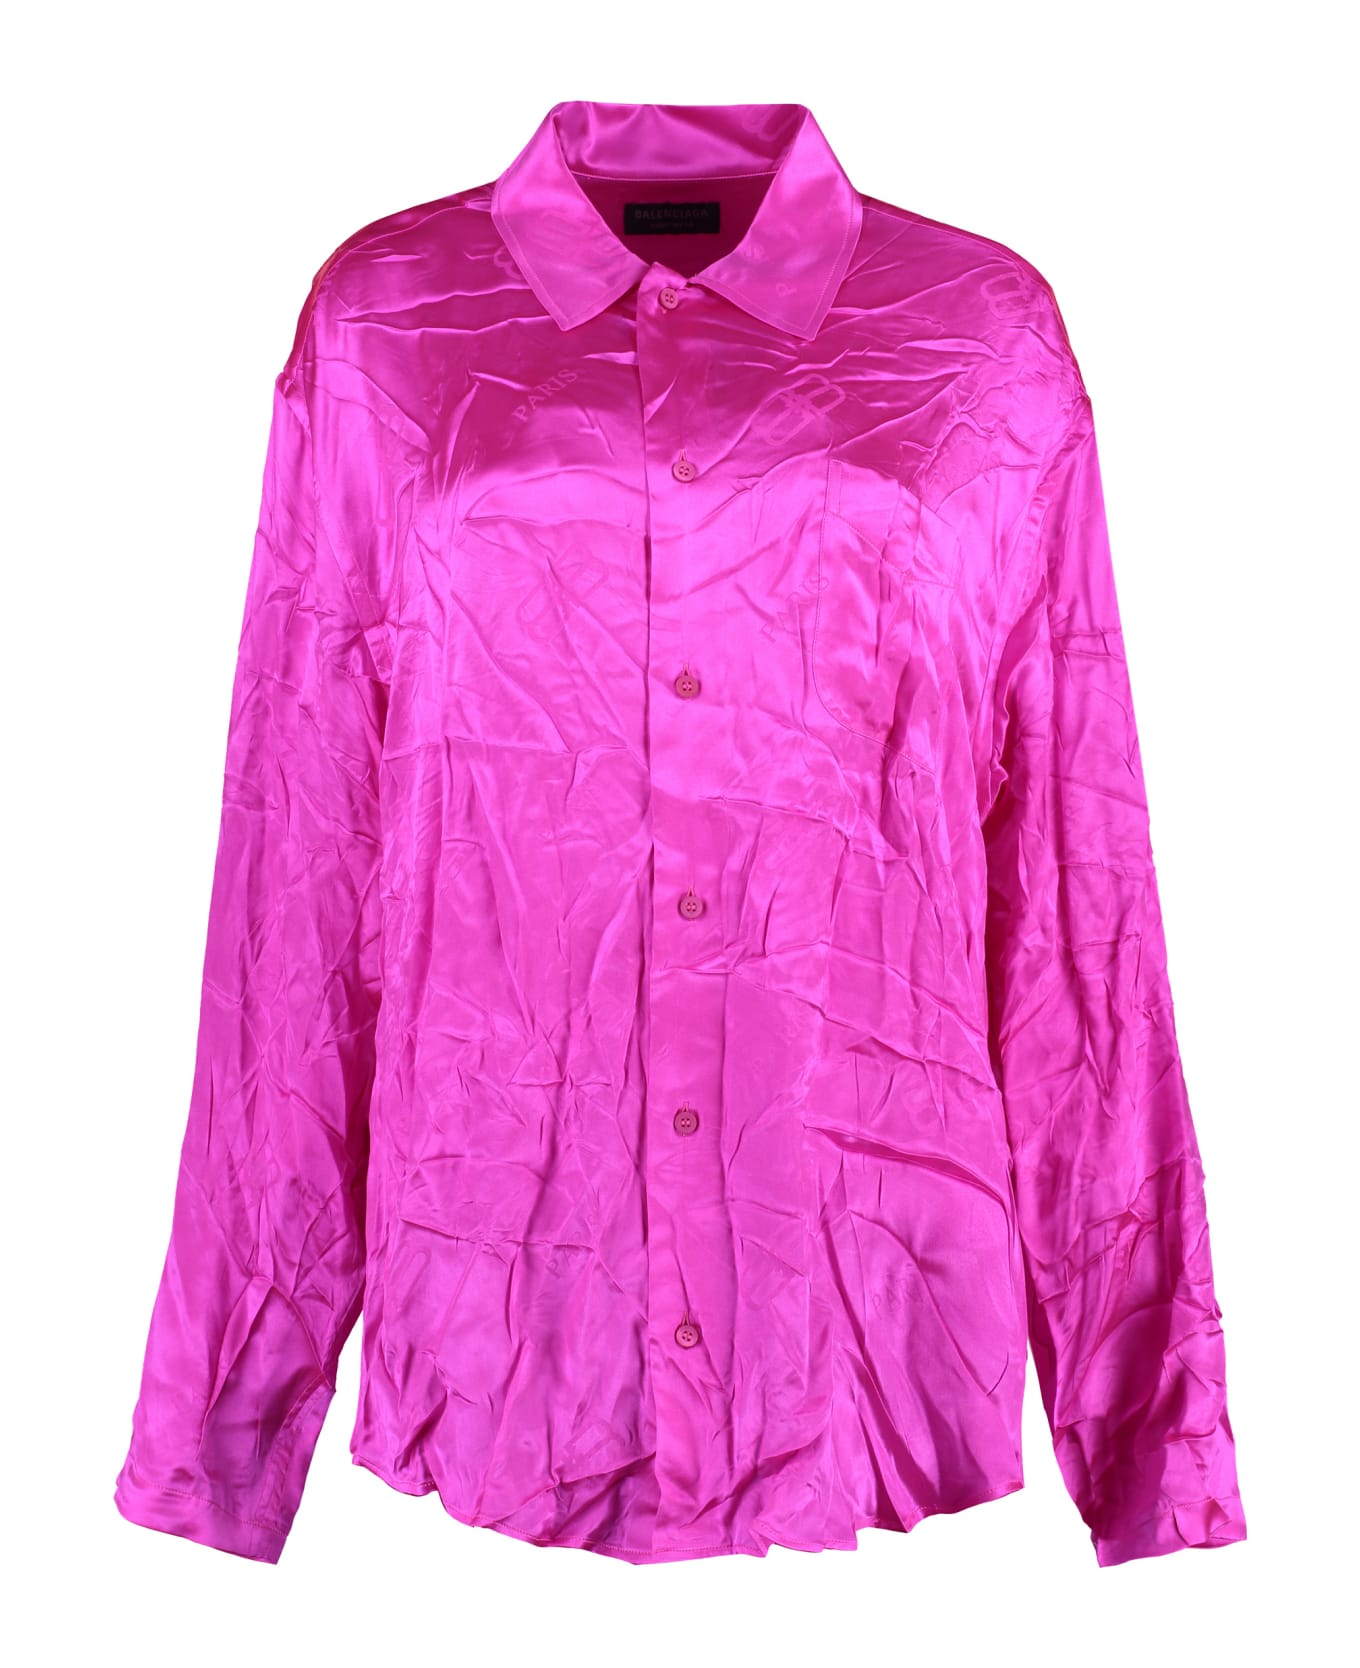 Balenciaga Silk Shirt - Fuchsia